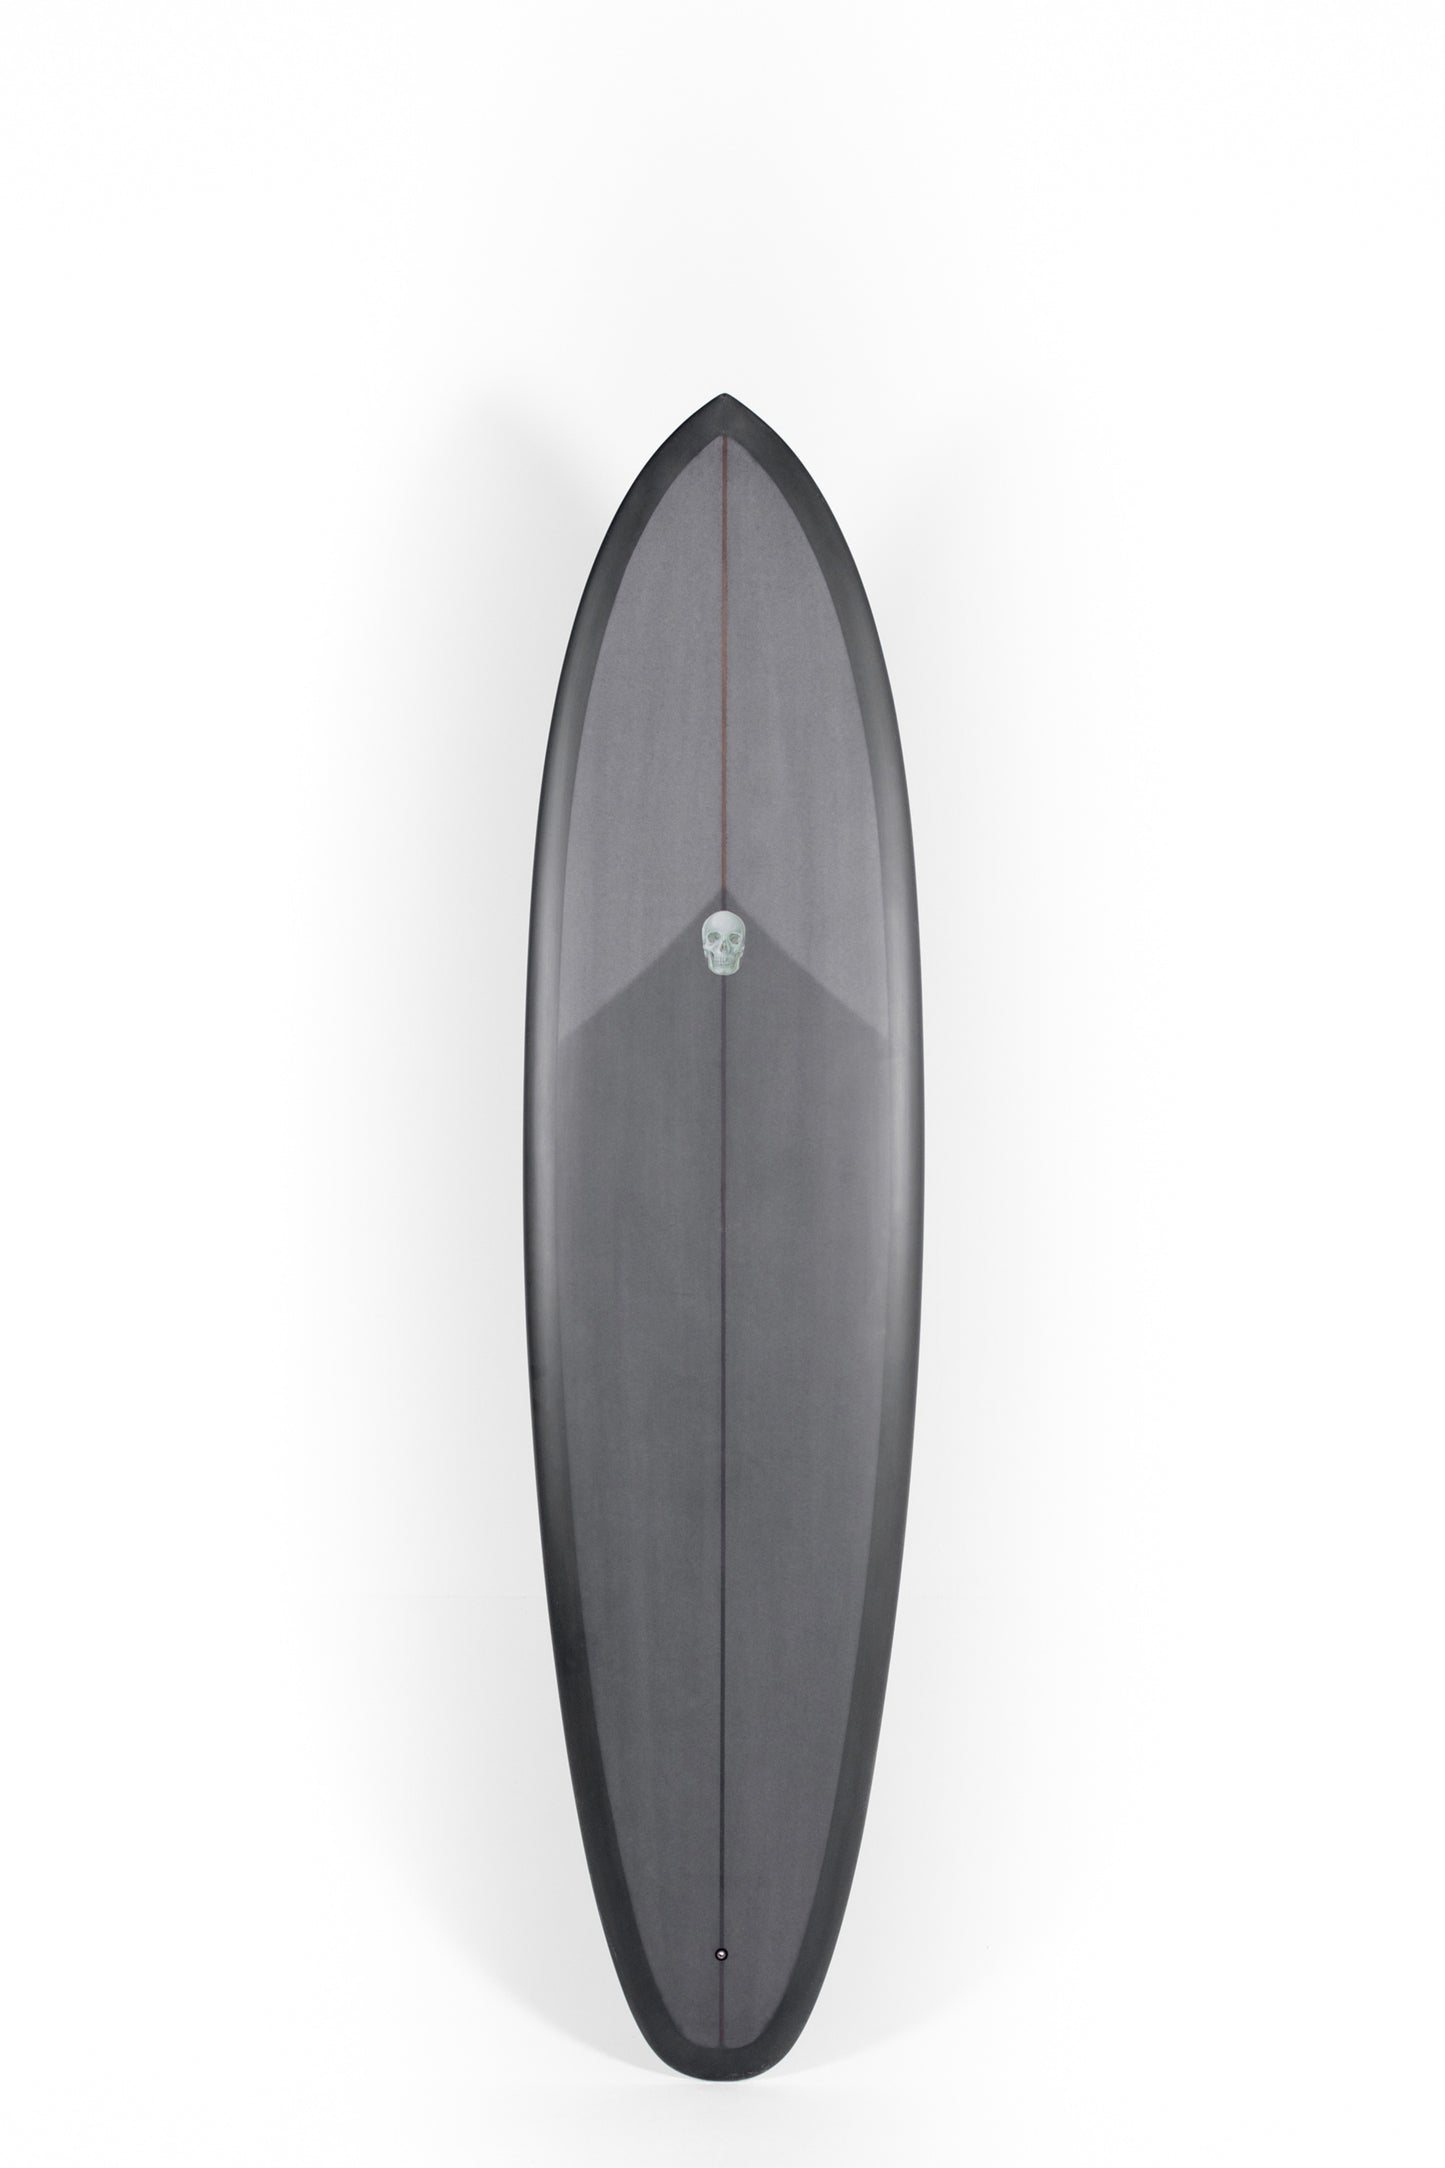 Christenson Surfboards - FLAT TRACKER 2.0 - 7'4